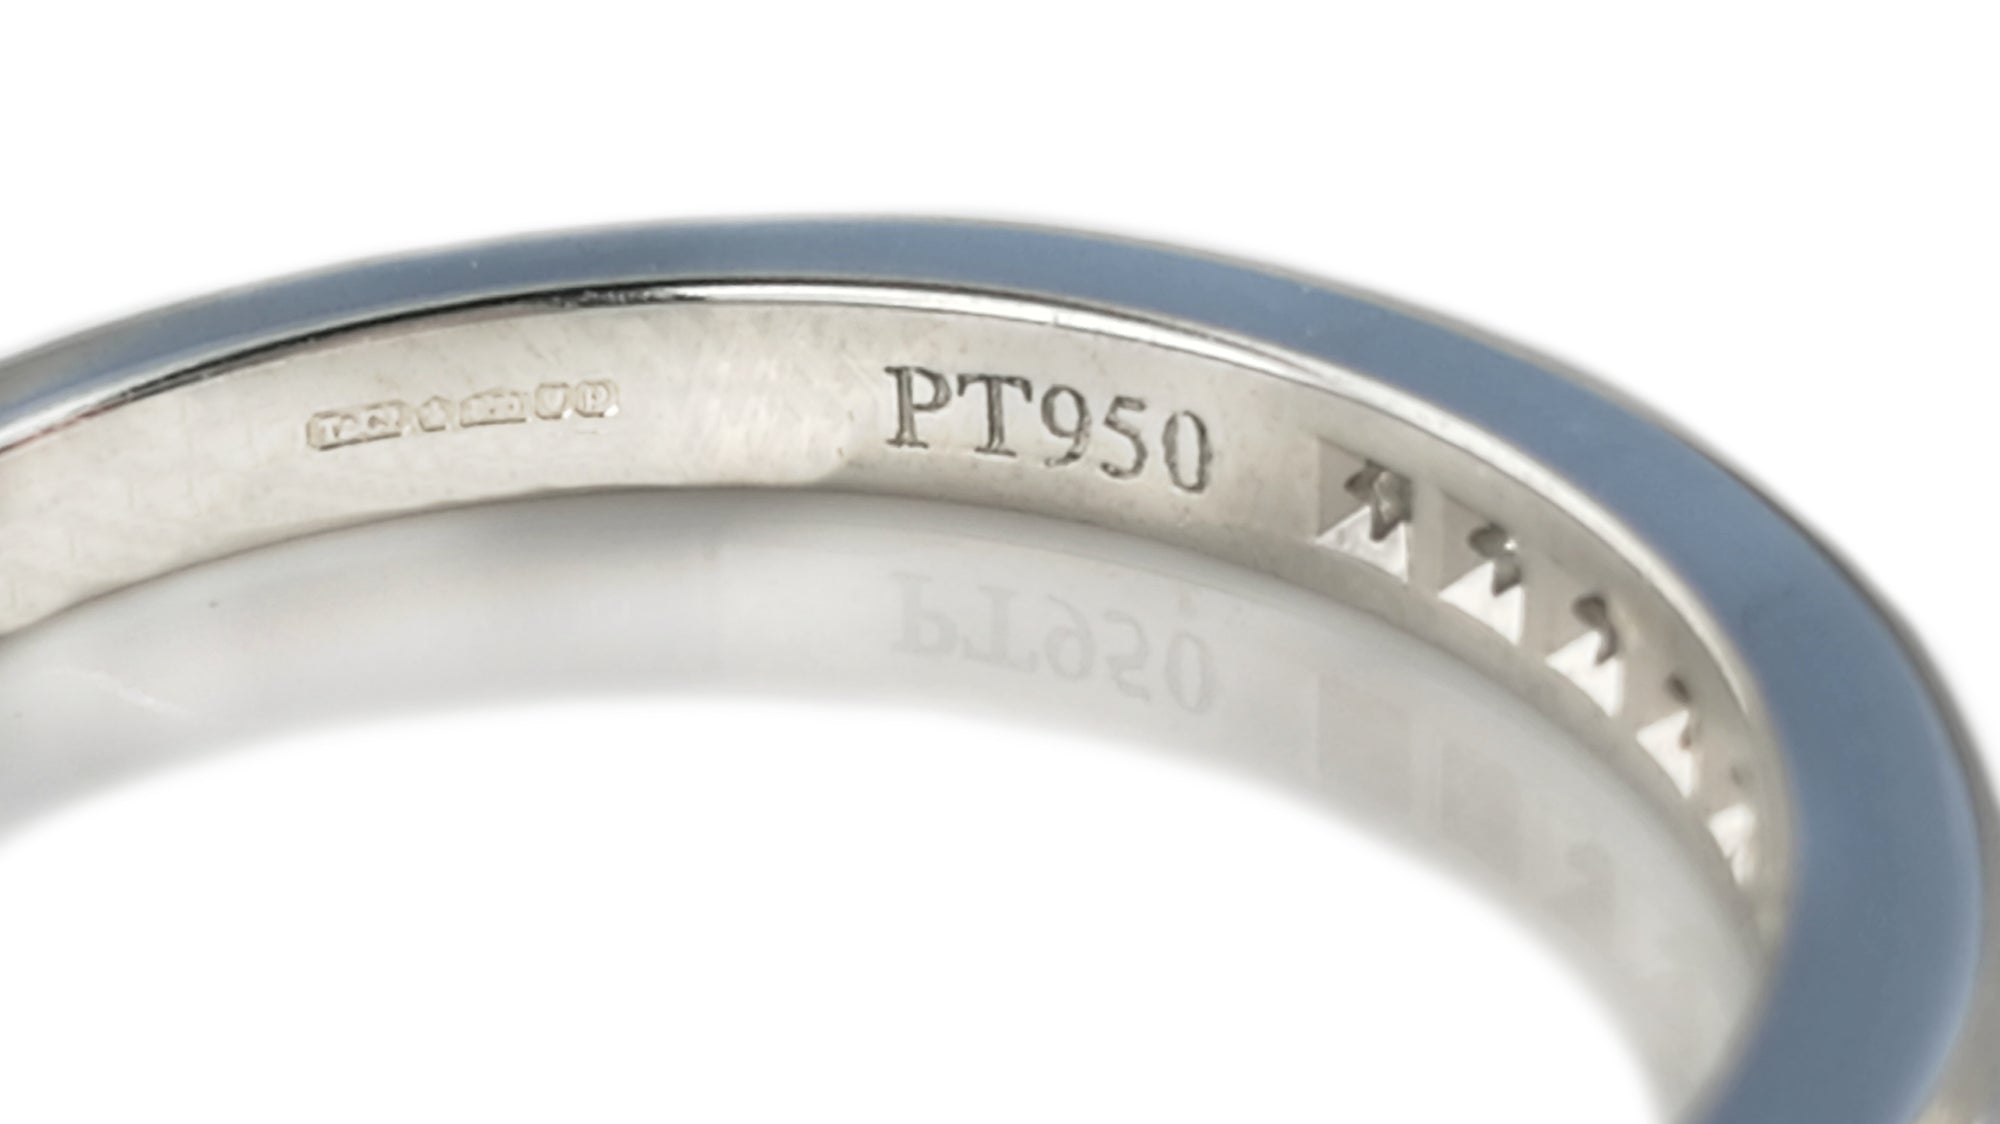 Tiffany & Co. 2.5mm 0.24ct Diamond Eternity Wedding Band / Ring